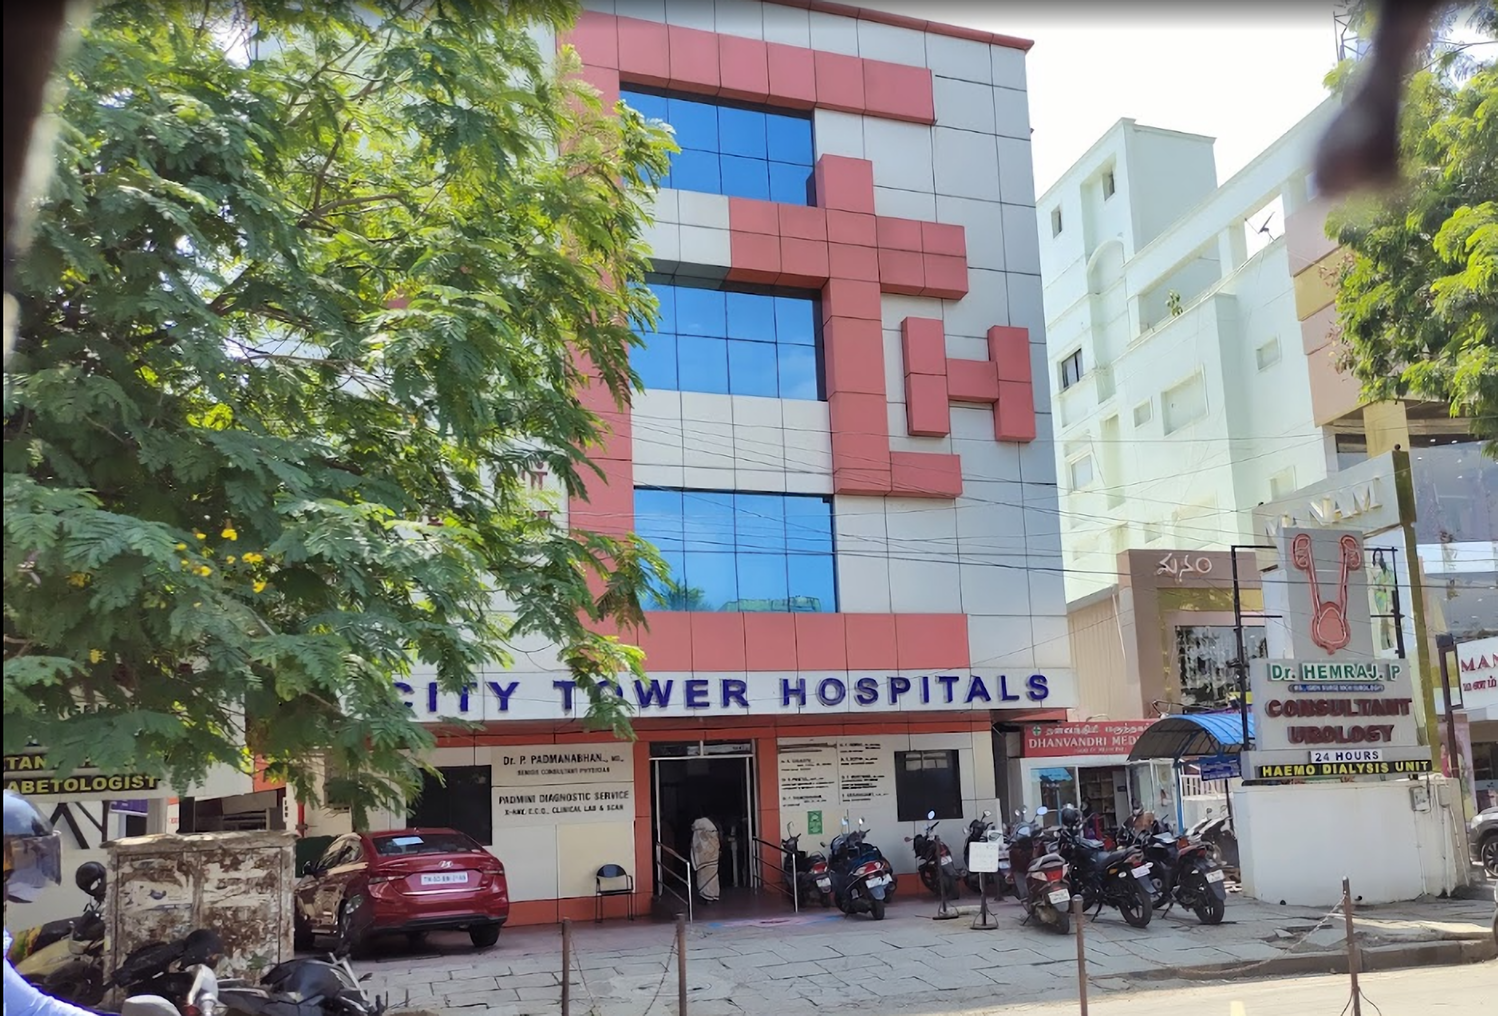 City Tower Hospital photo